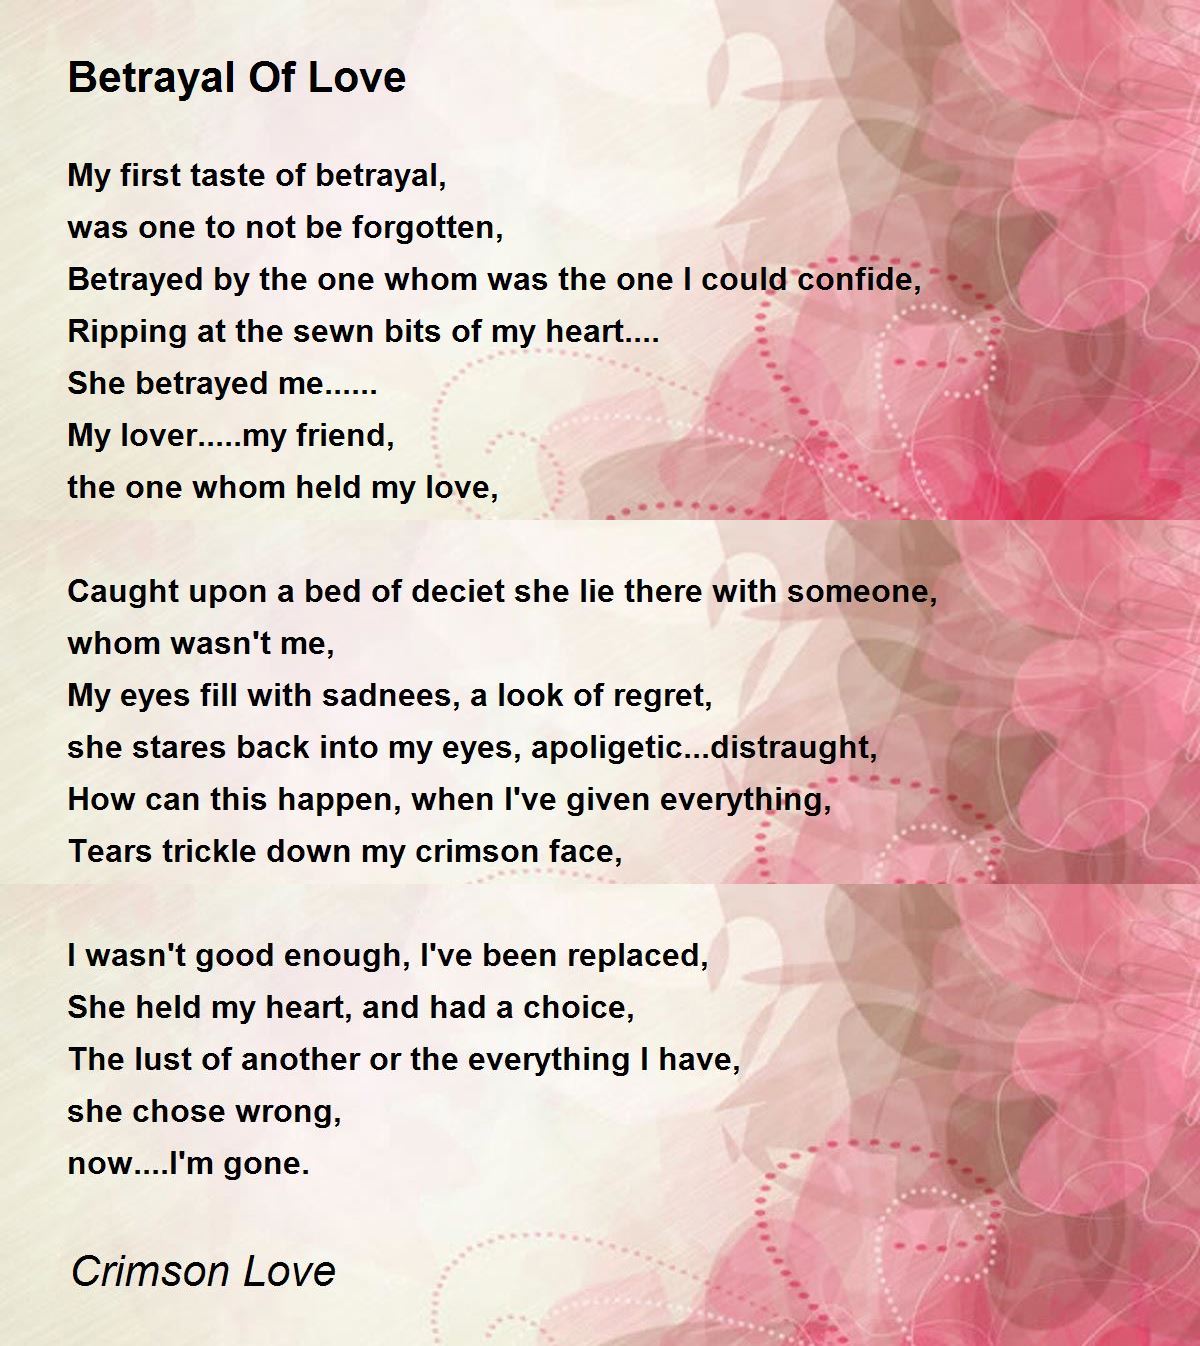 Betrayal Of Love - Betrayal Of Love Poem by Crimson Love